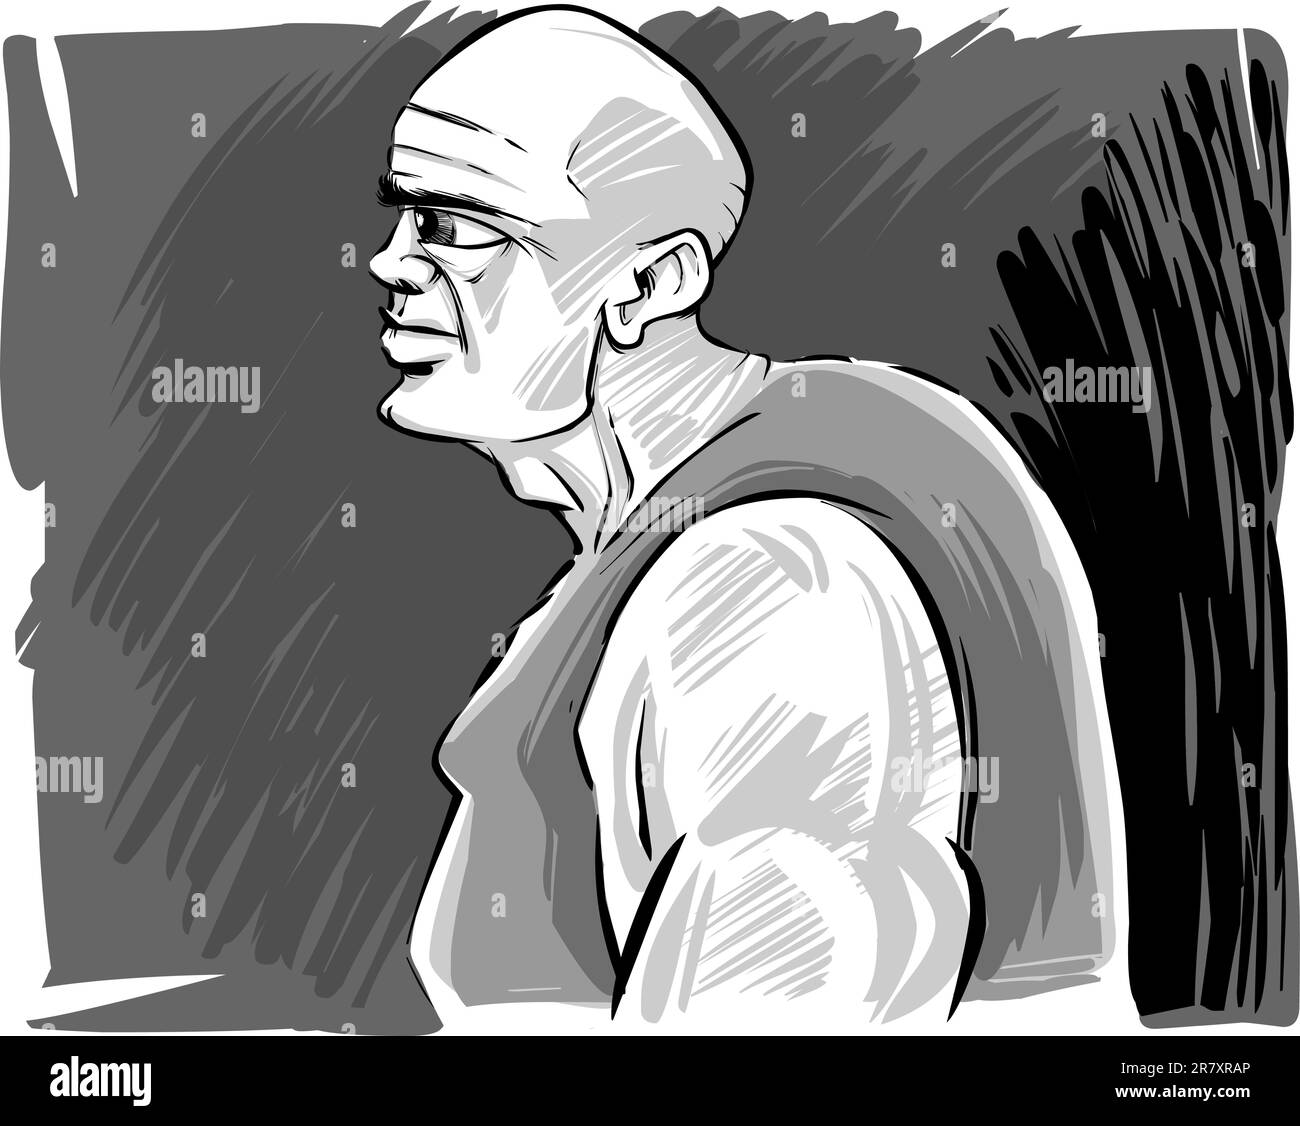 sketch caricature illustration of muscular bald man Stock Vector